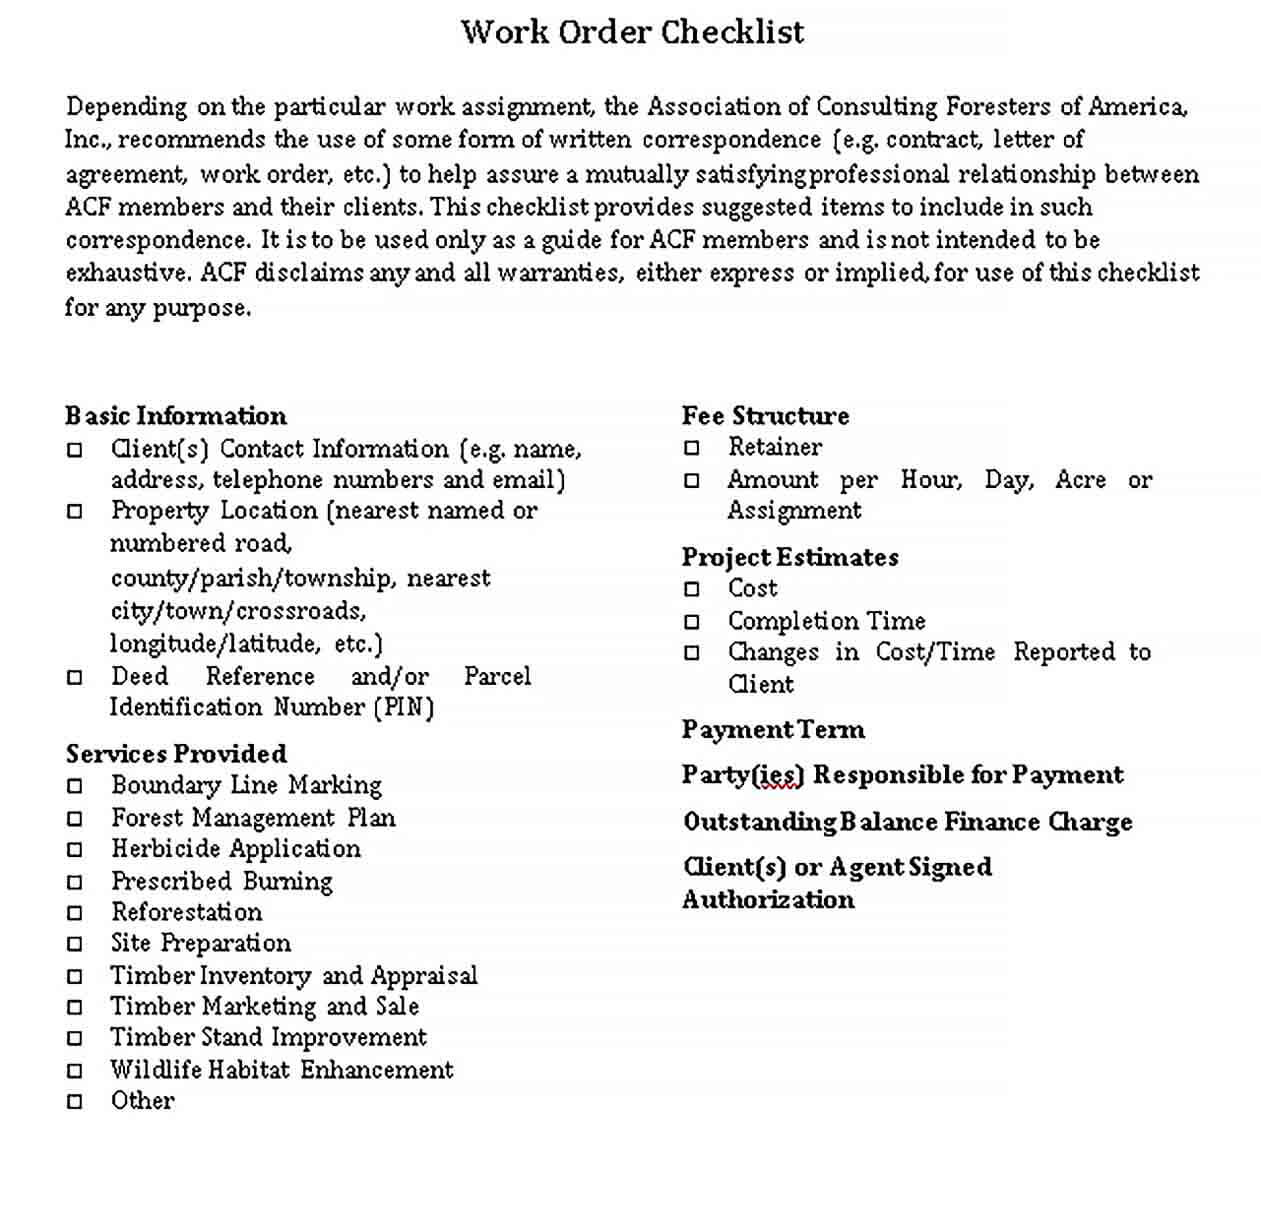 Sample Checklist of Work Order